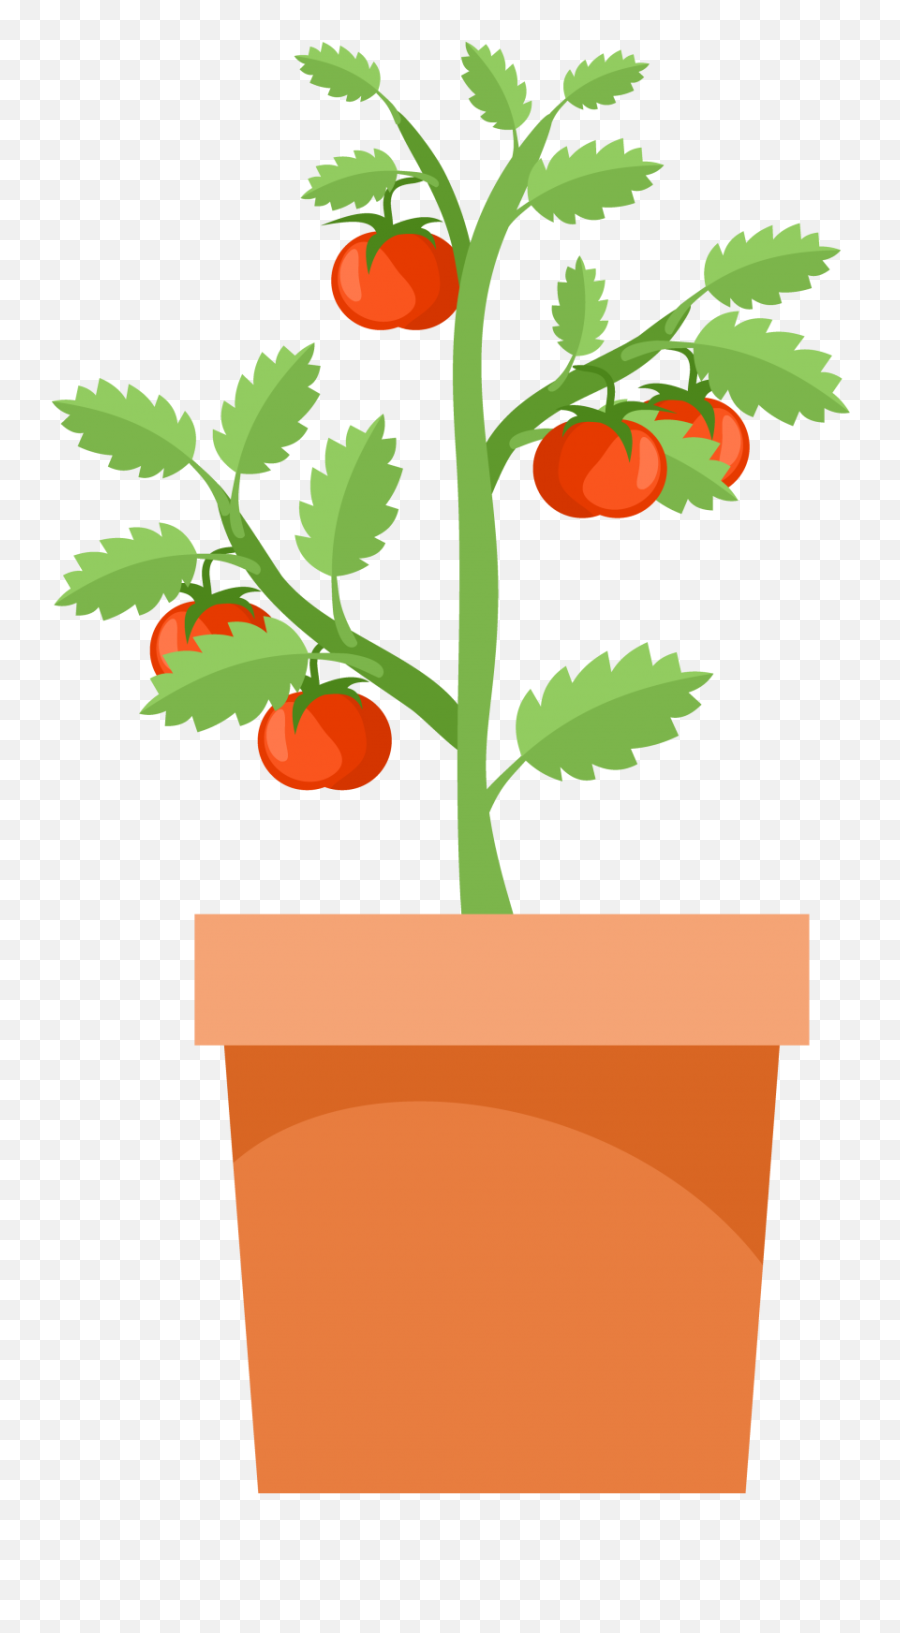 Tomato Plant Illustration Clipart Free Stock Photo - Public Emoji,Artwork Clipart